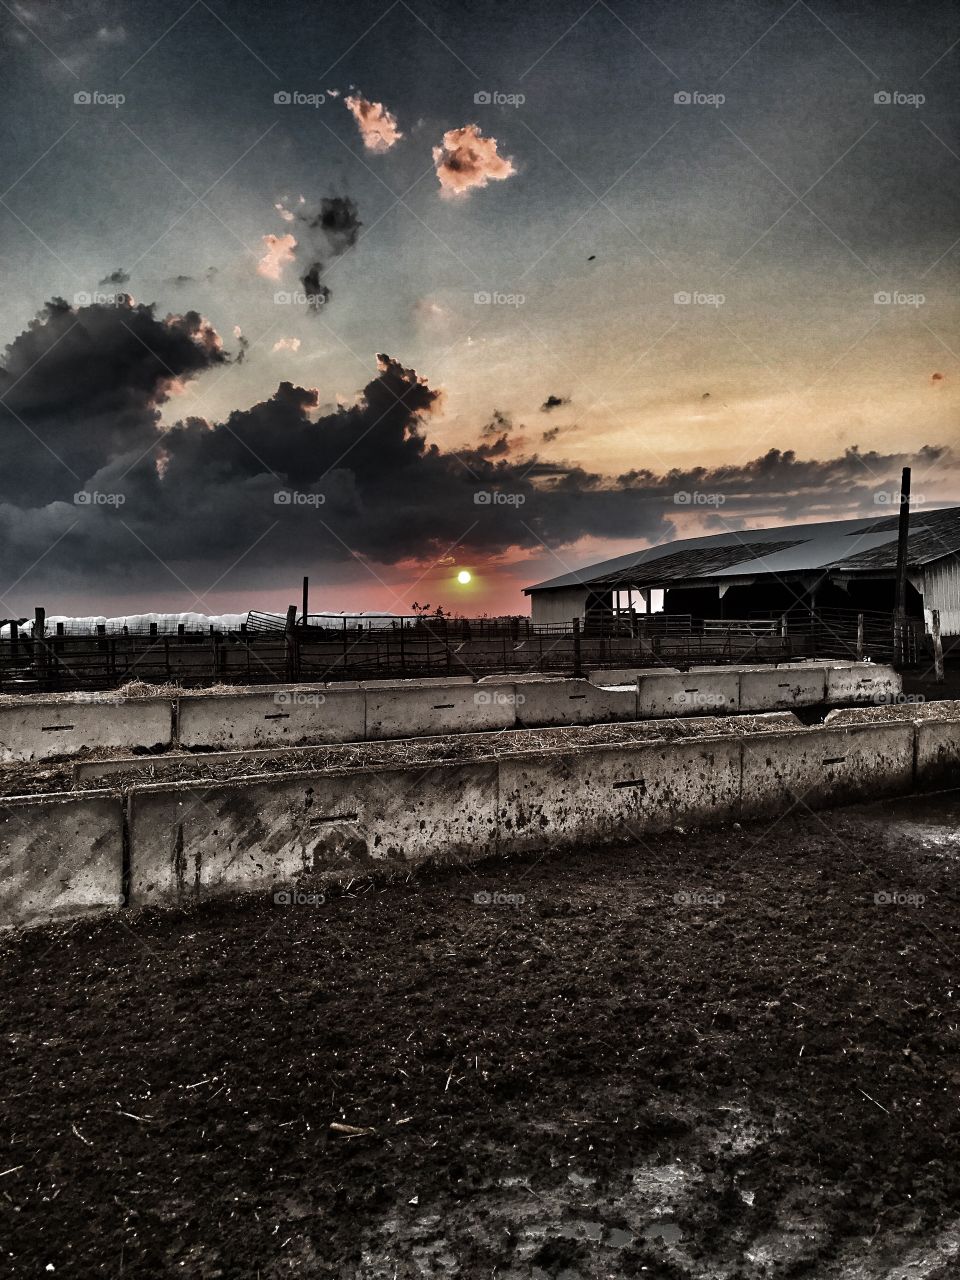 Sunset over the cattle barn